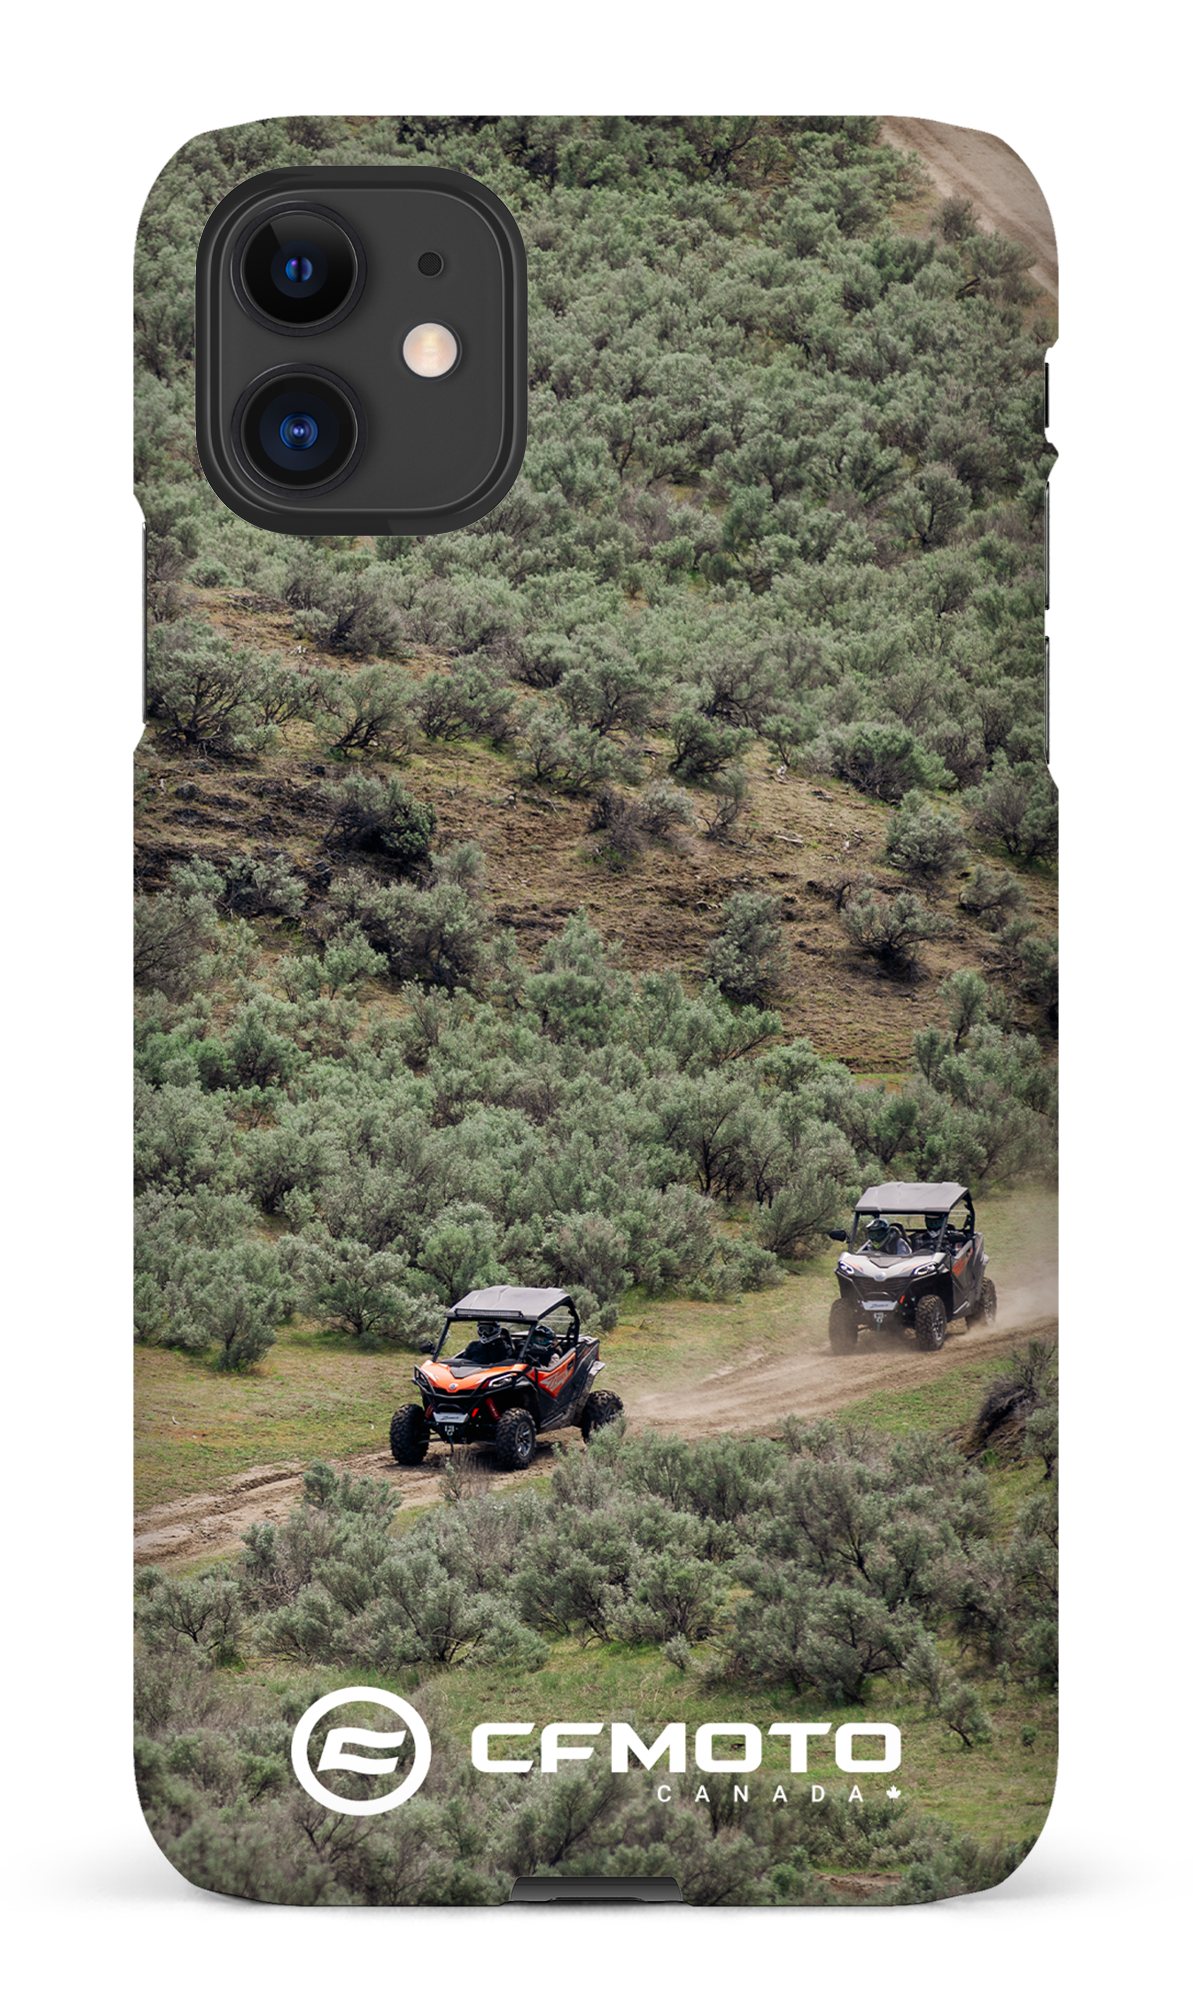 CF Moto 1 - iPhone 11